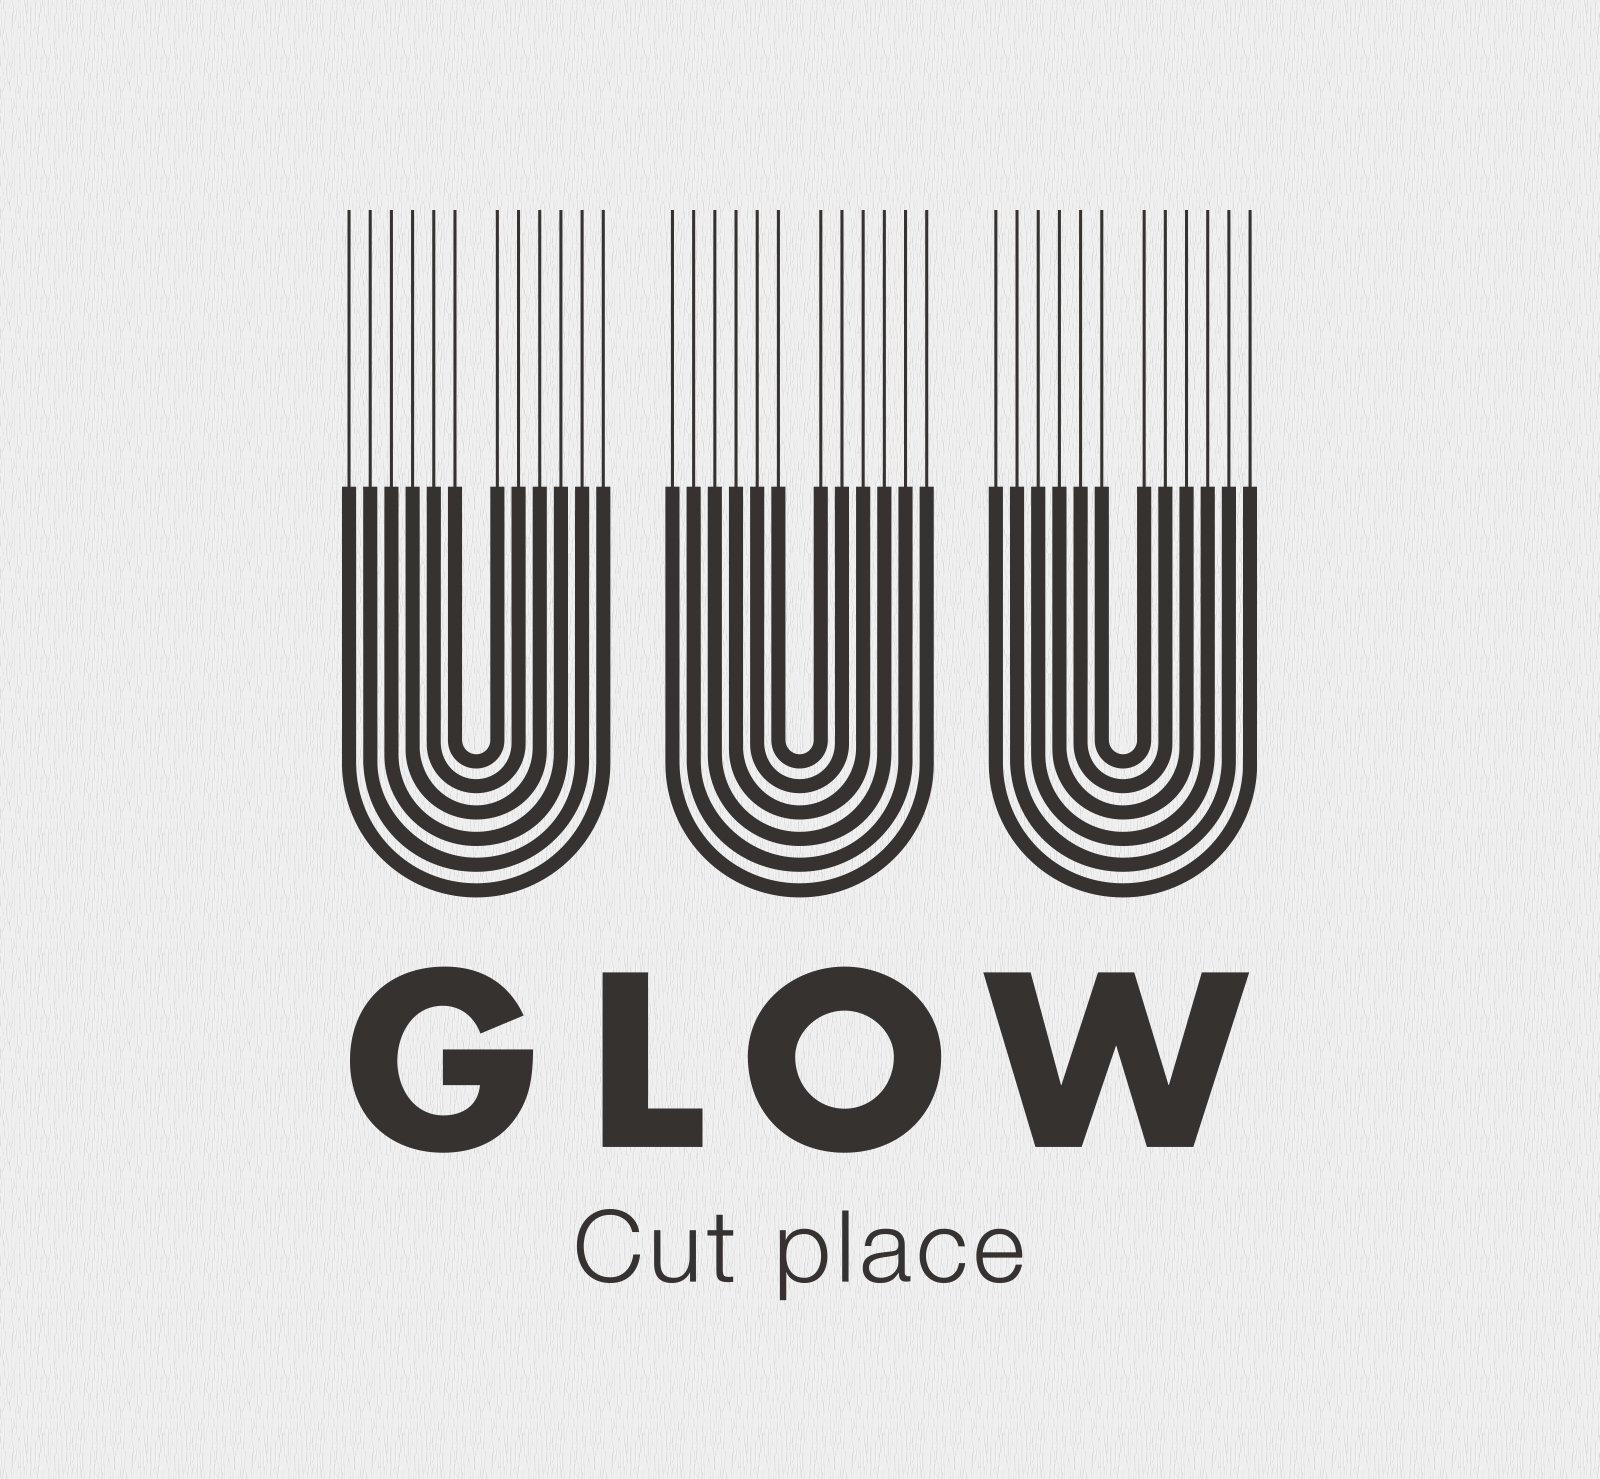 Cut place GLOW Logo